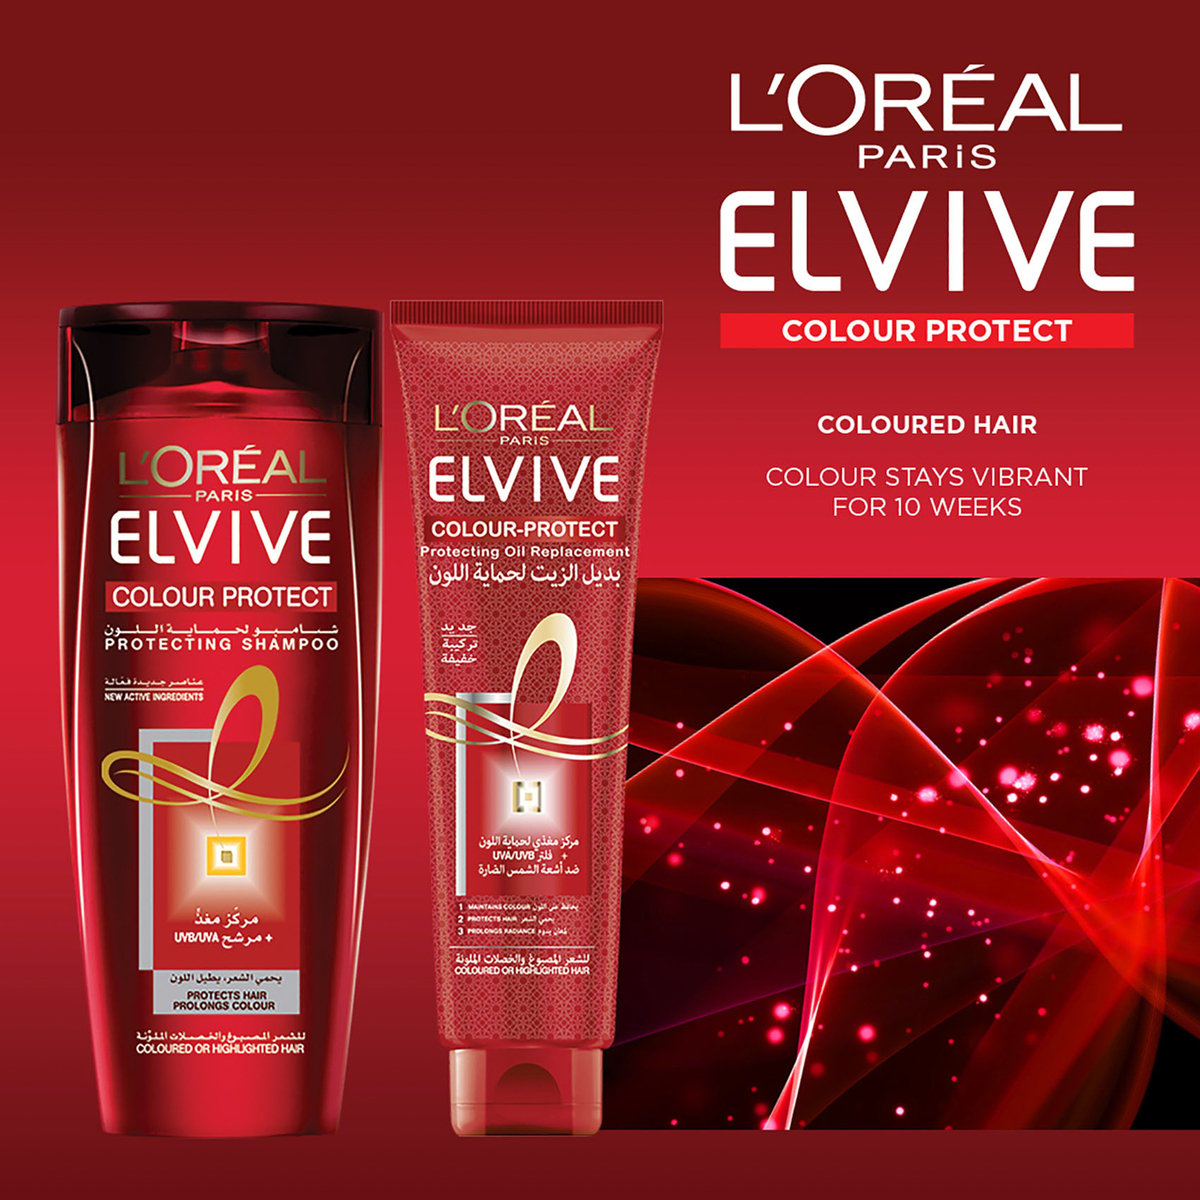 L'Oreal Paris Elvive Colour Protect Shampoo 400 ml